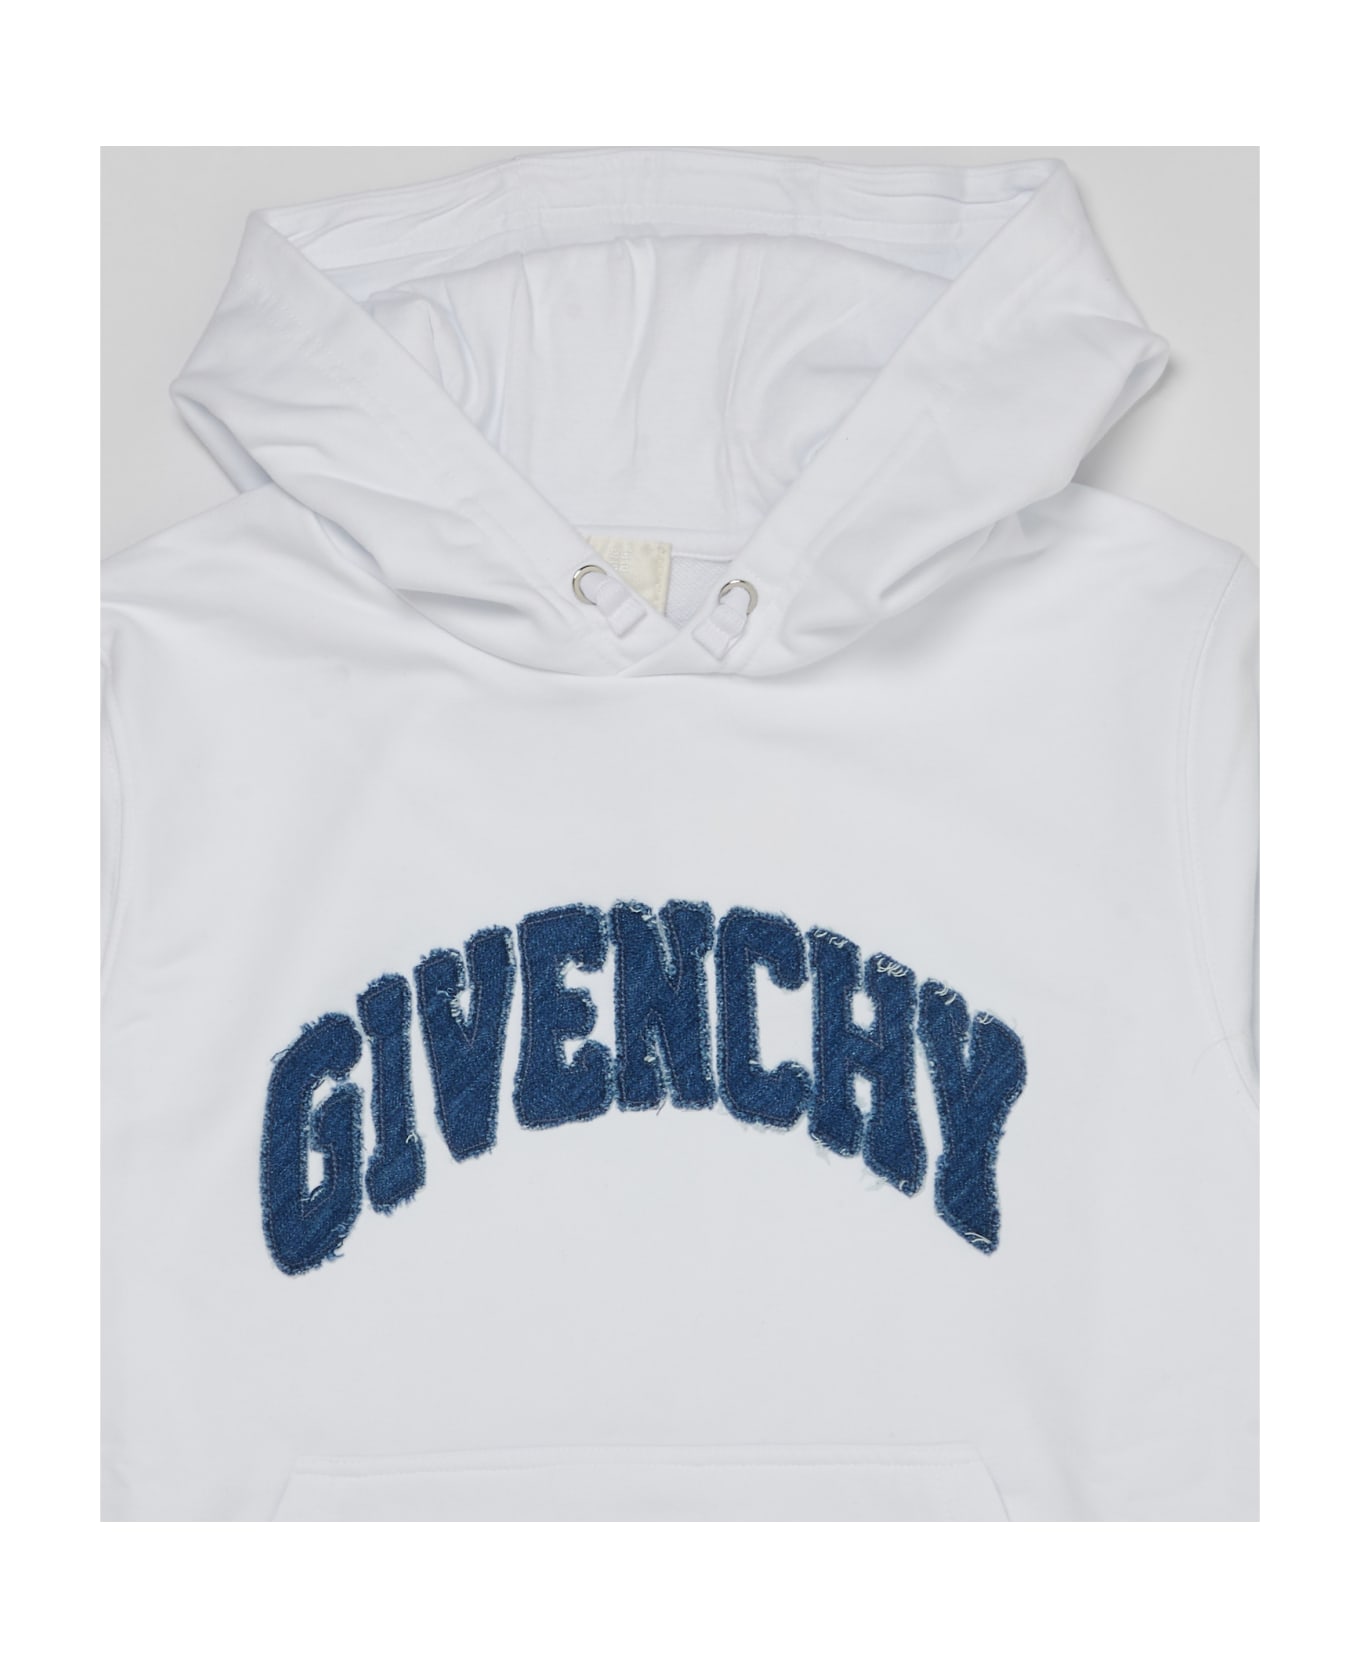 Givenchy Hoodie Sweatshirt - BIANCO